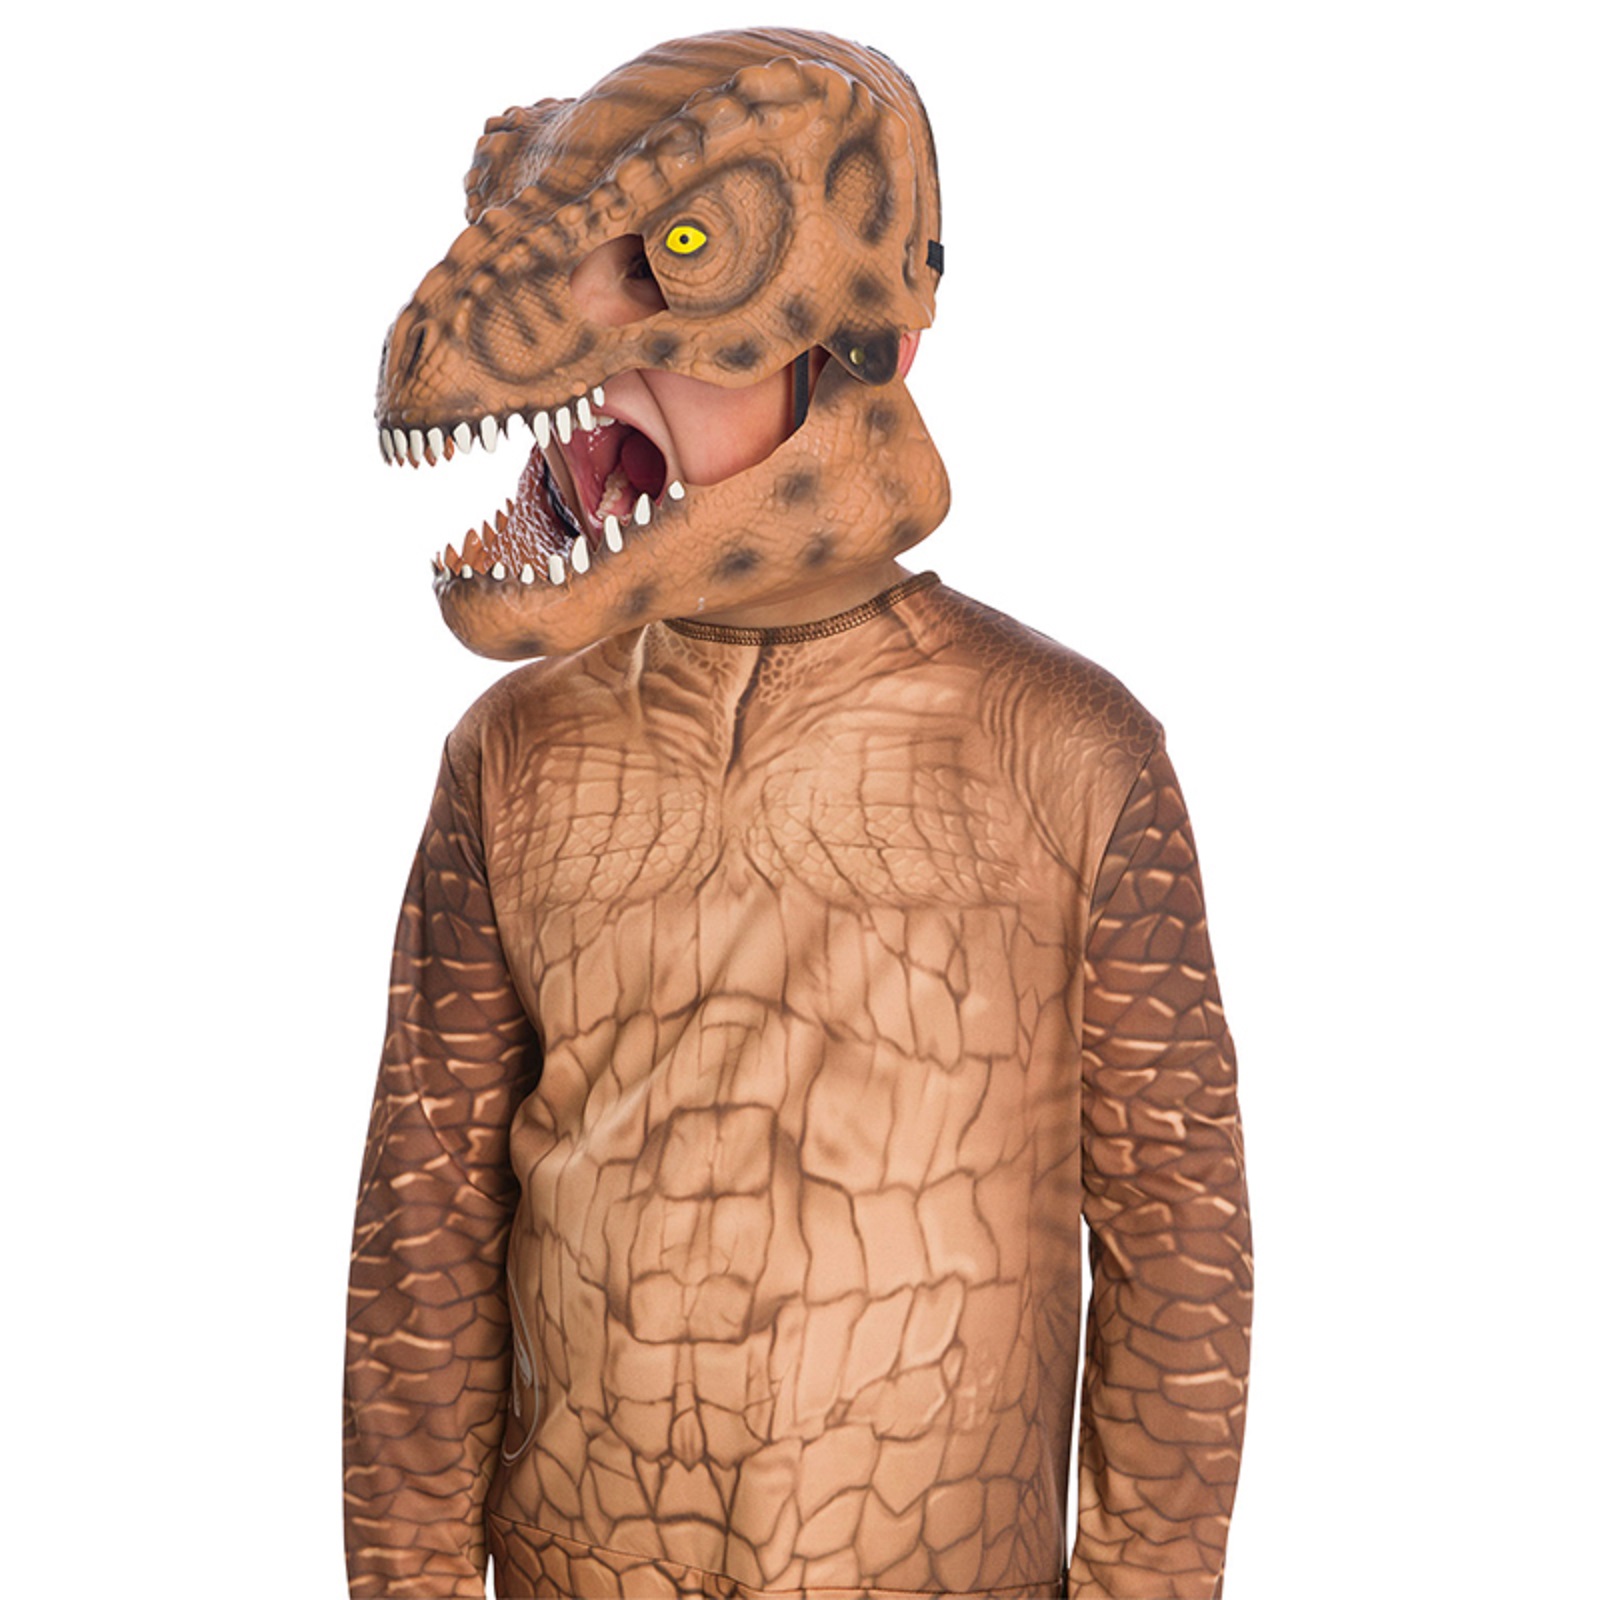 Rubies 368055 - Tyrannosaurus Rex, bewegliche Maske, Jurassic World - Child Mask